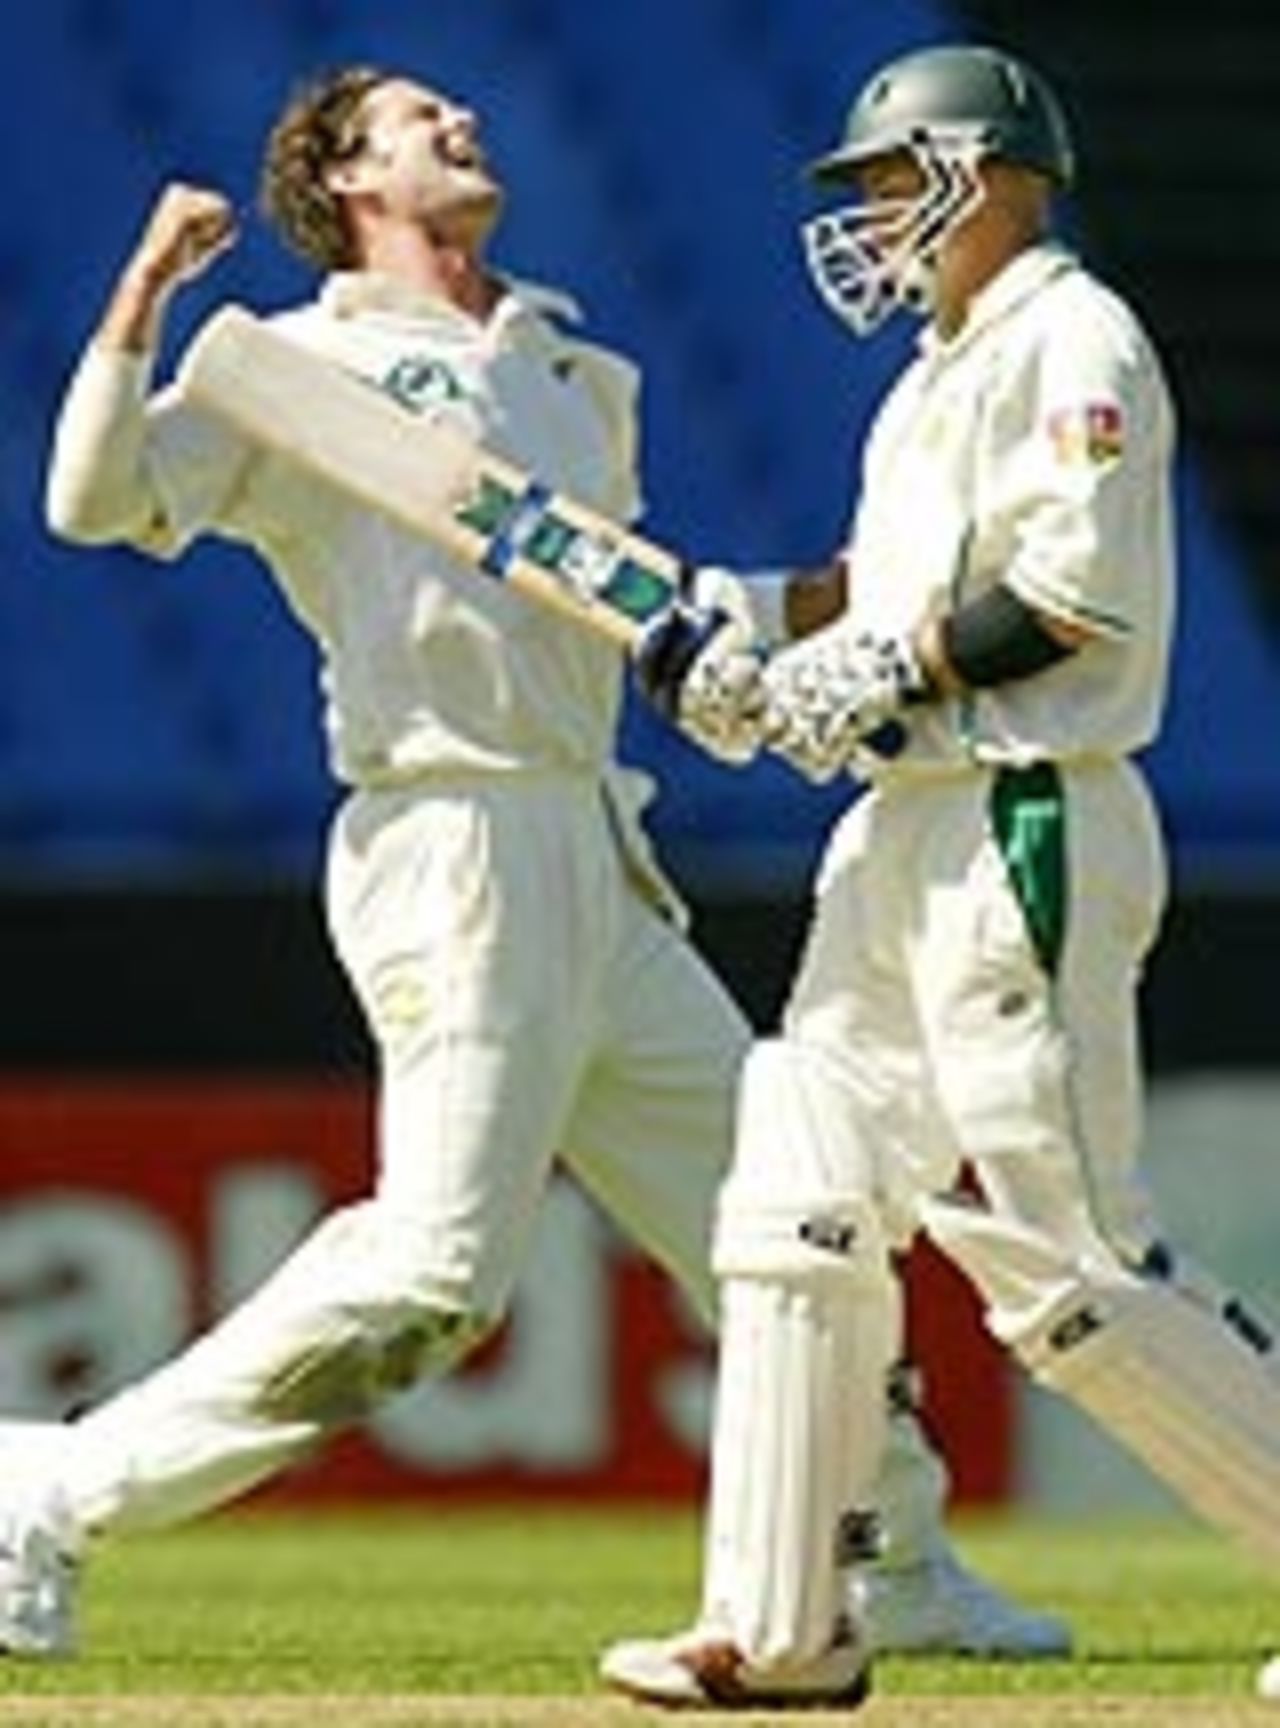 Chris Cairns celebrates as Herschelle Gibbs walks back, New Zealand v South Africa, 2nd Test, Auckland, 1st day, March 18, 2004